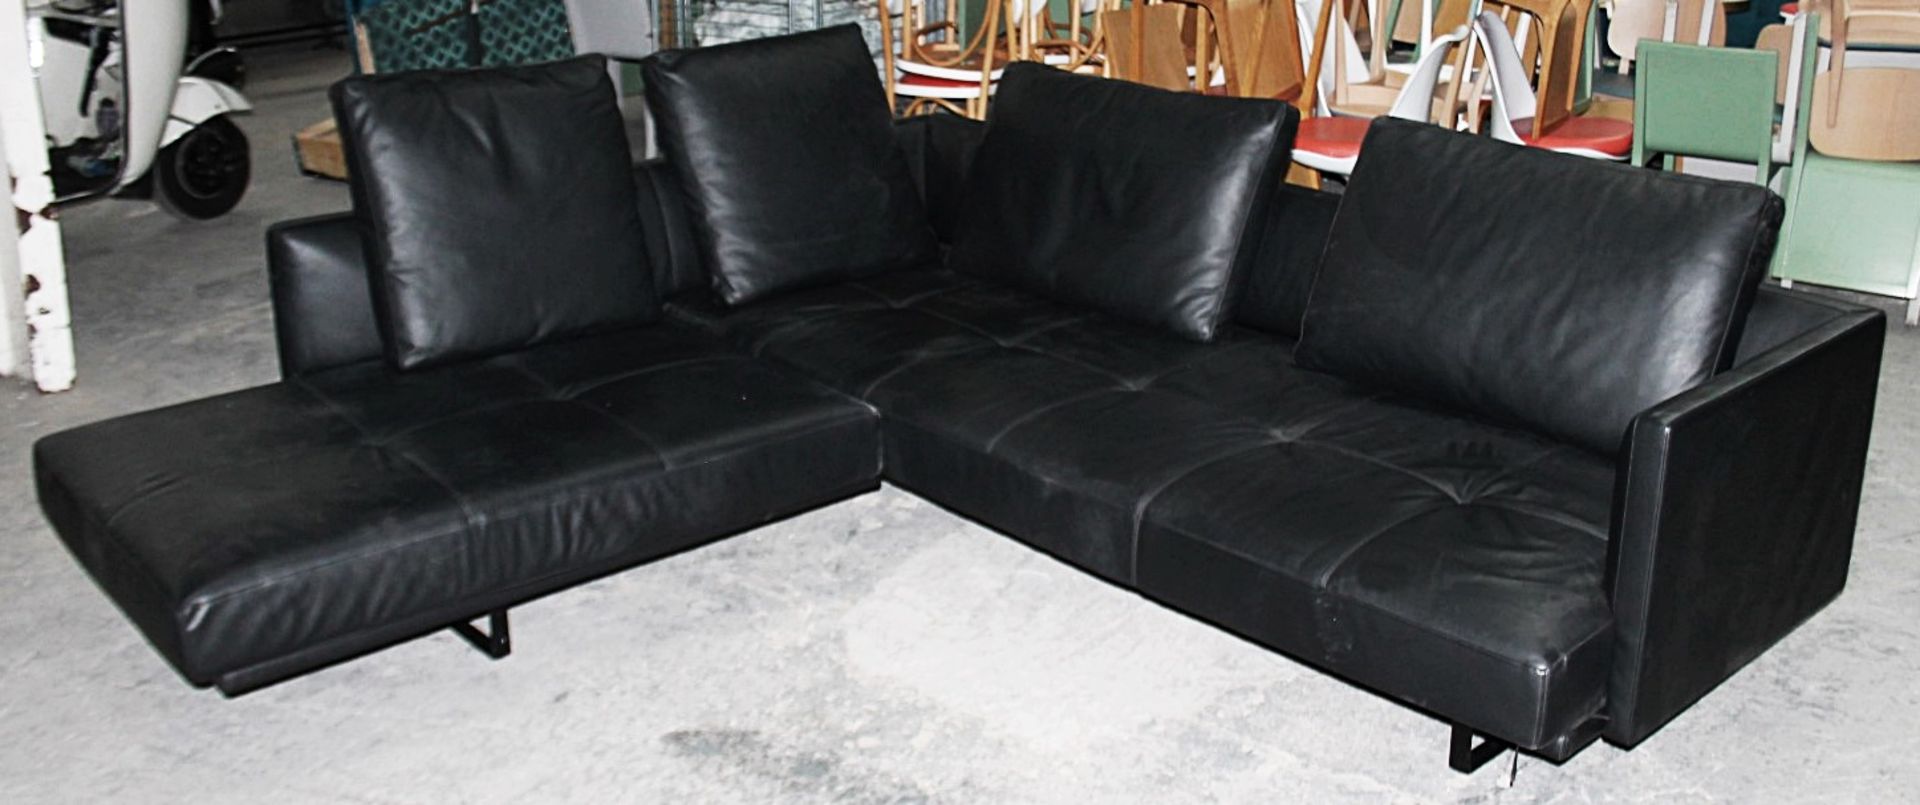 1 x WALTER KNOLL Designer Corner Sofa, Upholstered In A Soft Black Leather - Image 3 of 11